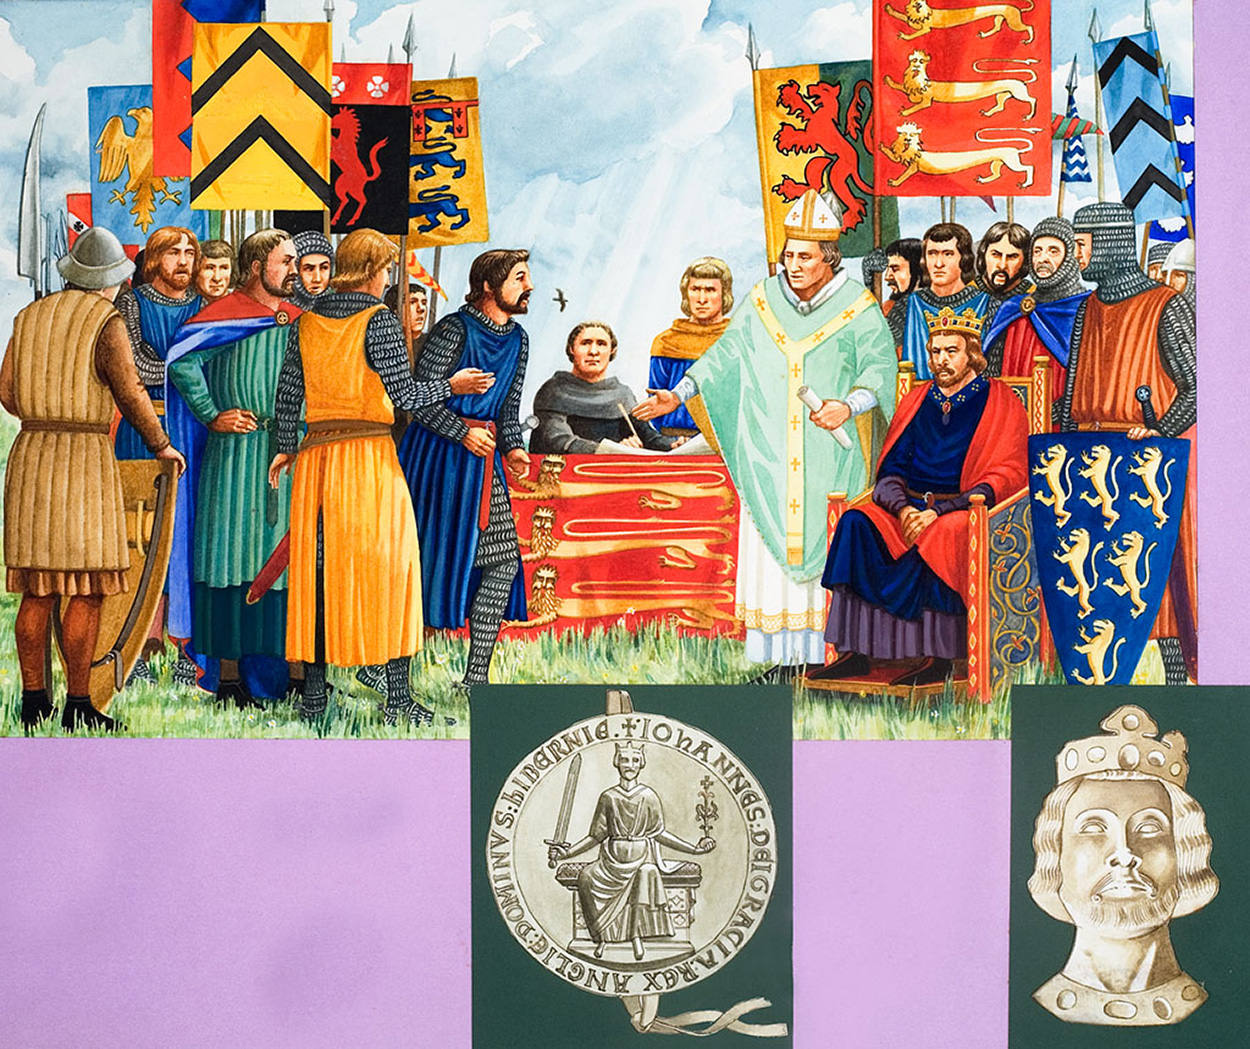 King John Signs the Magna Carta (Original) art by Dan Escott at The Illustration Art Gallery